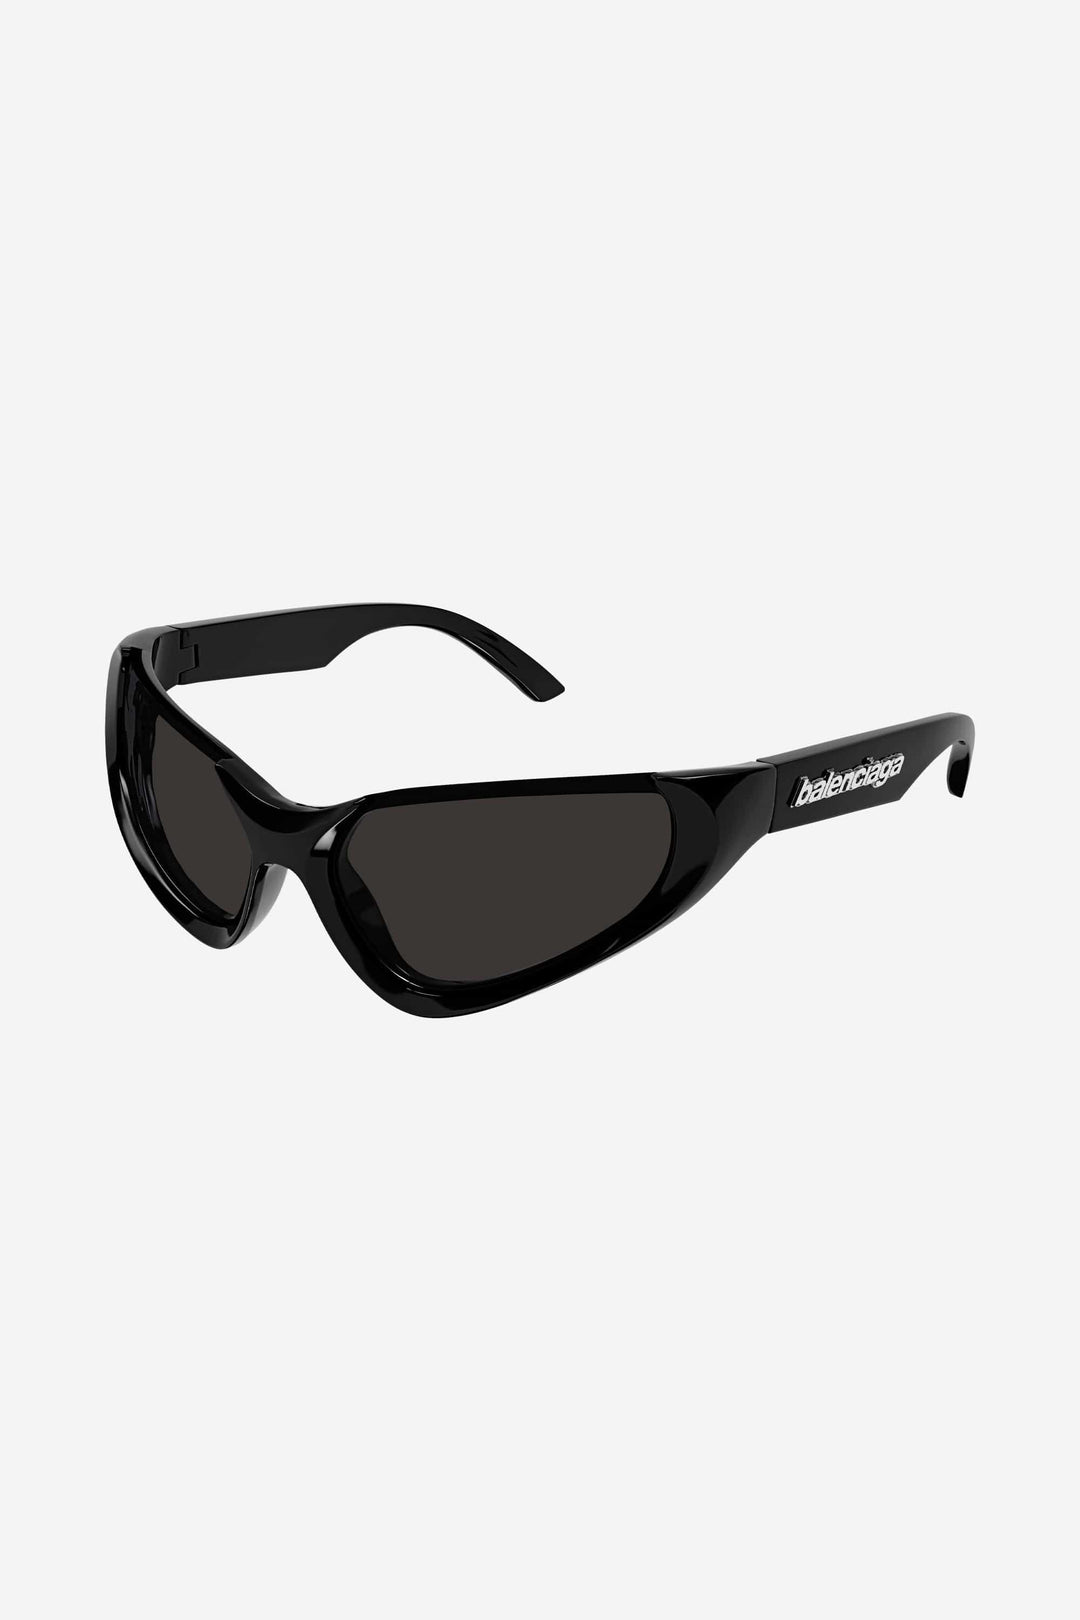 Balenciaga Black wrap around black sunglasses - Eyewear Club